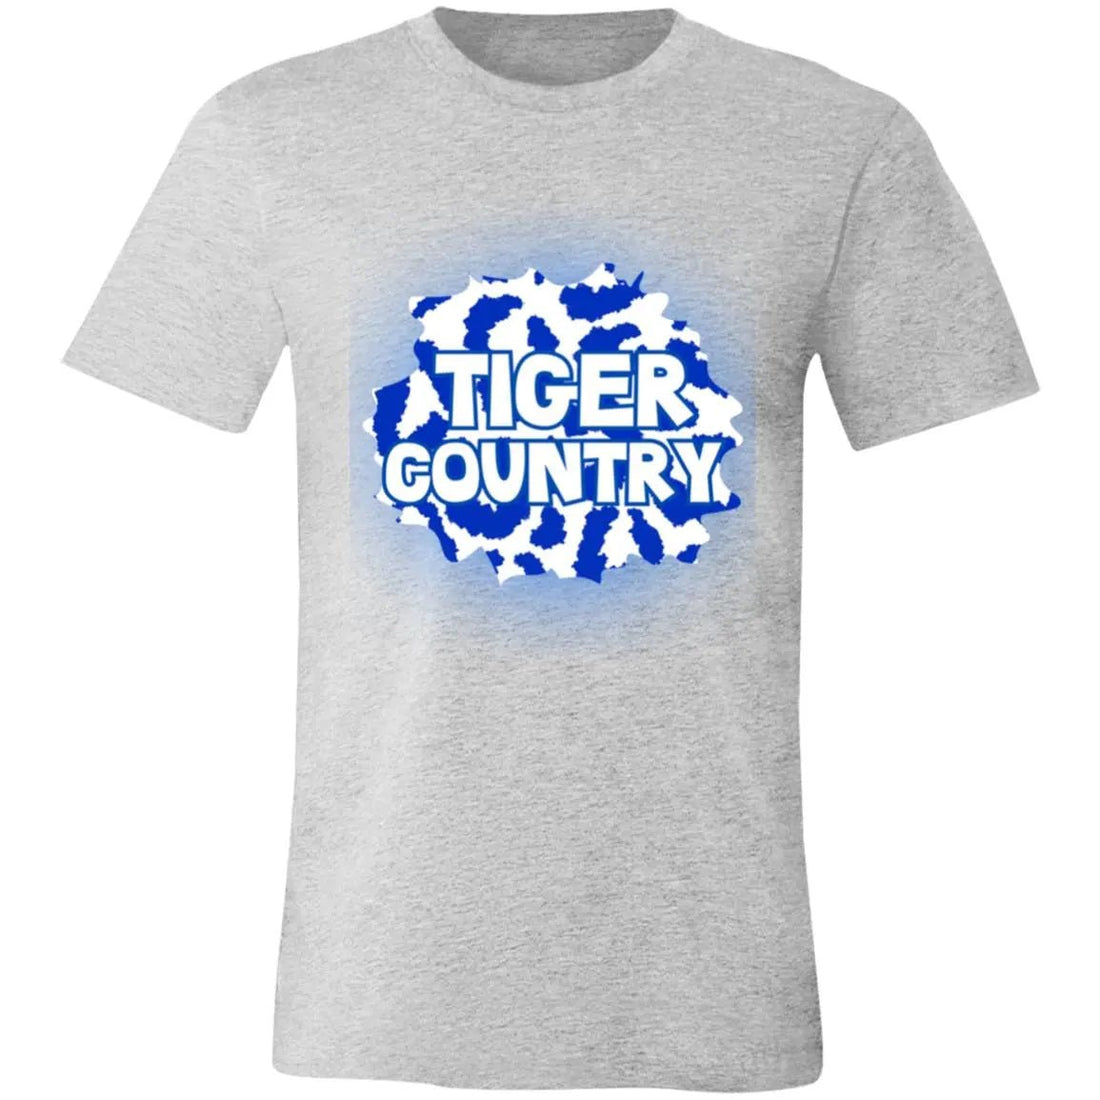 Tiger Country Short-Sleeve T-Shirt - T-Shirts - Positively Sassy - Tiger Country Short-Sleeve T-Shirt